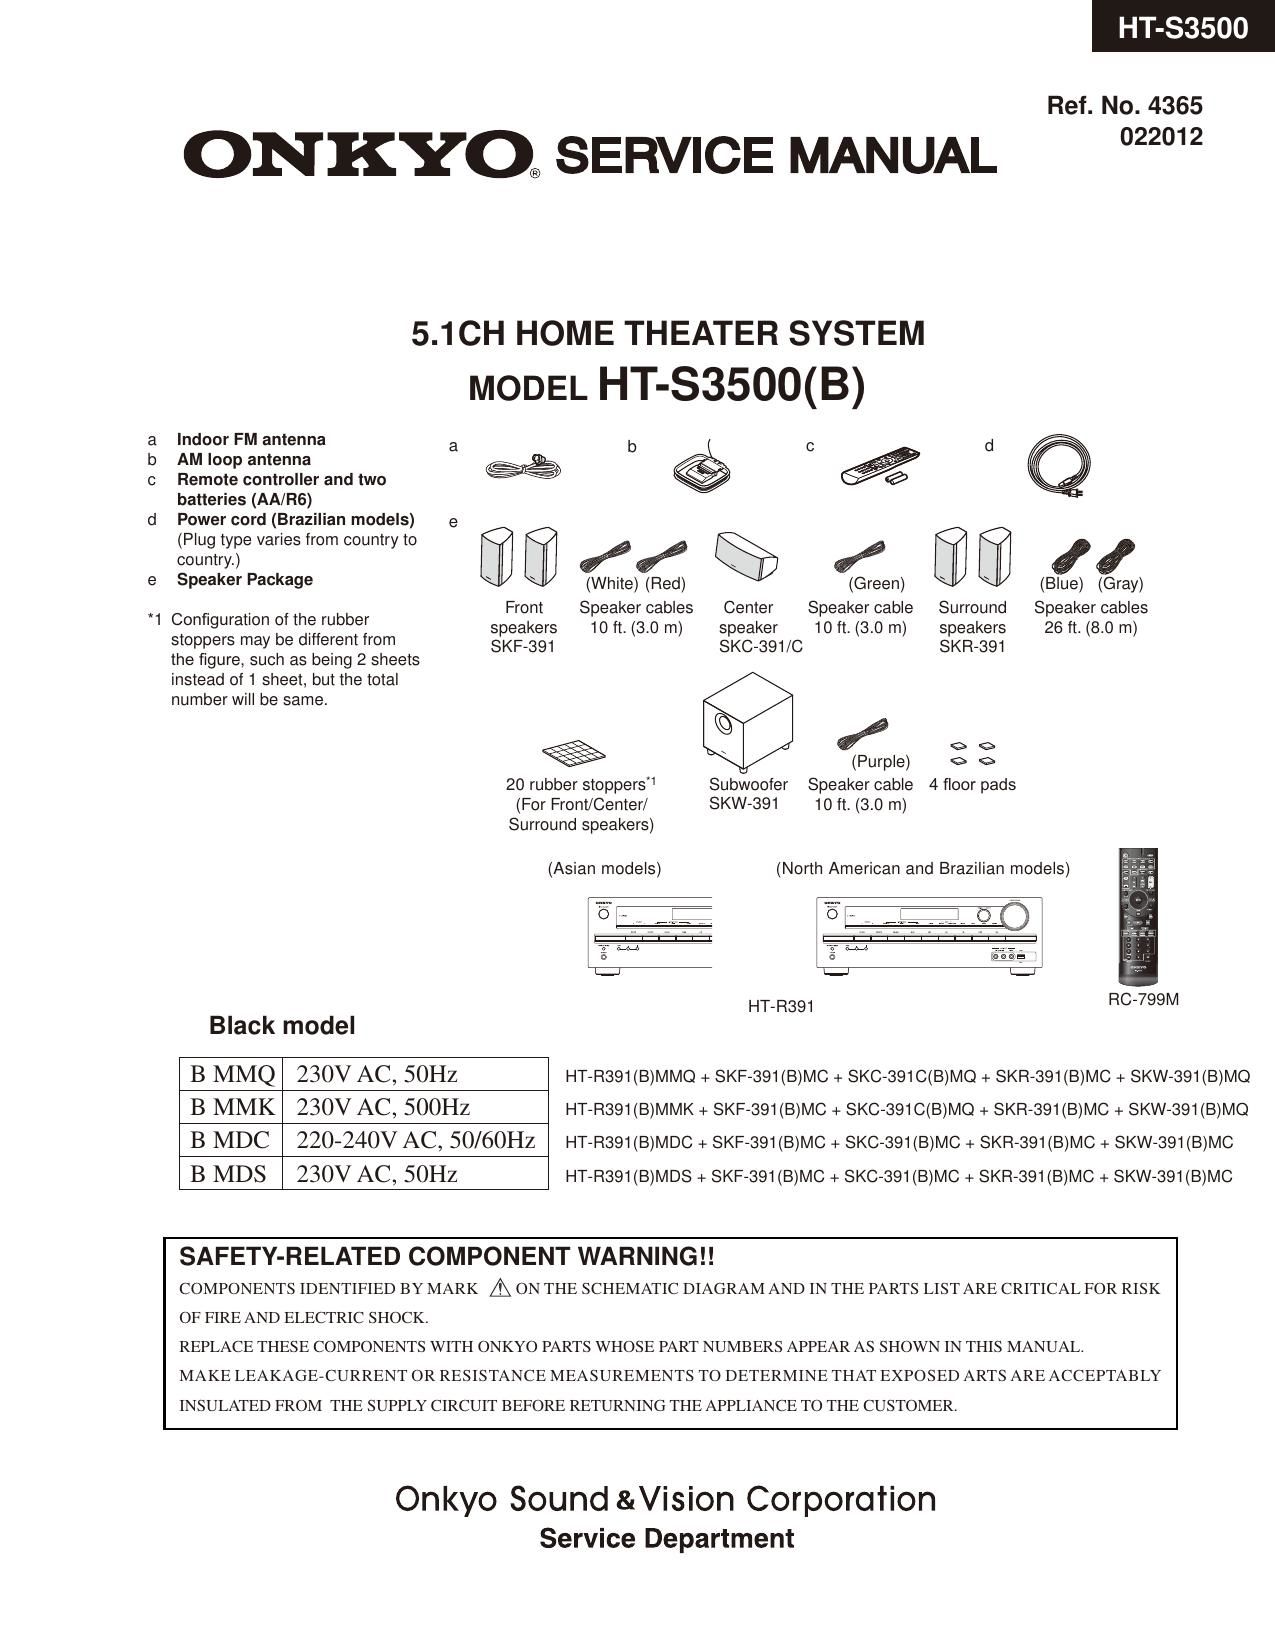 Onkyo HTR 391 Service Manual